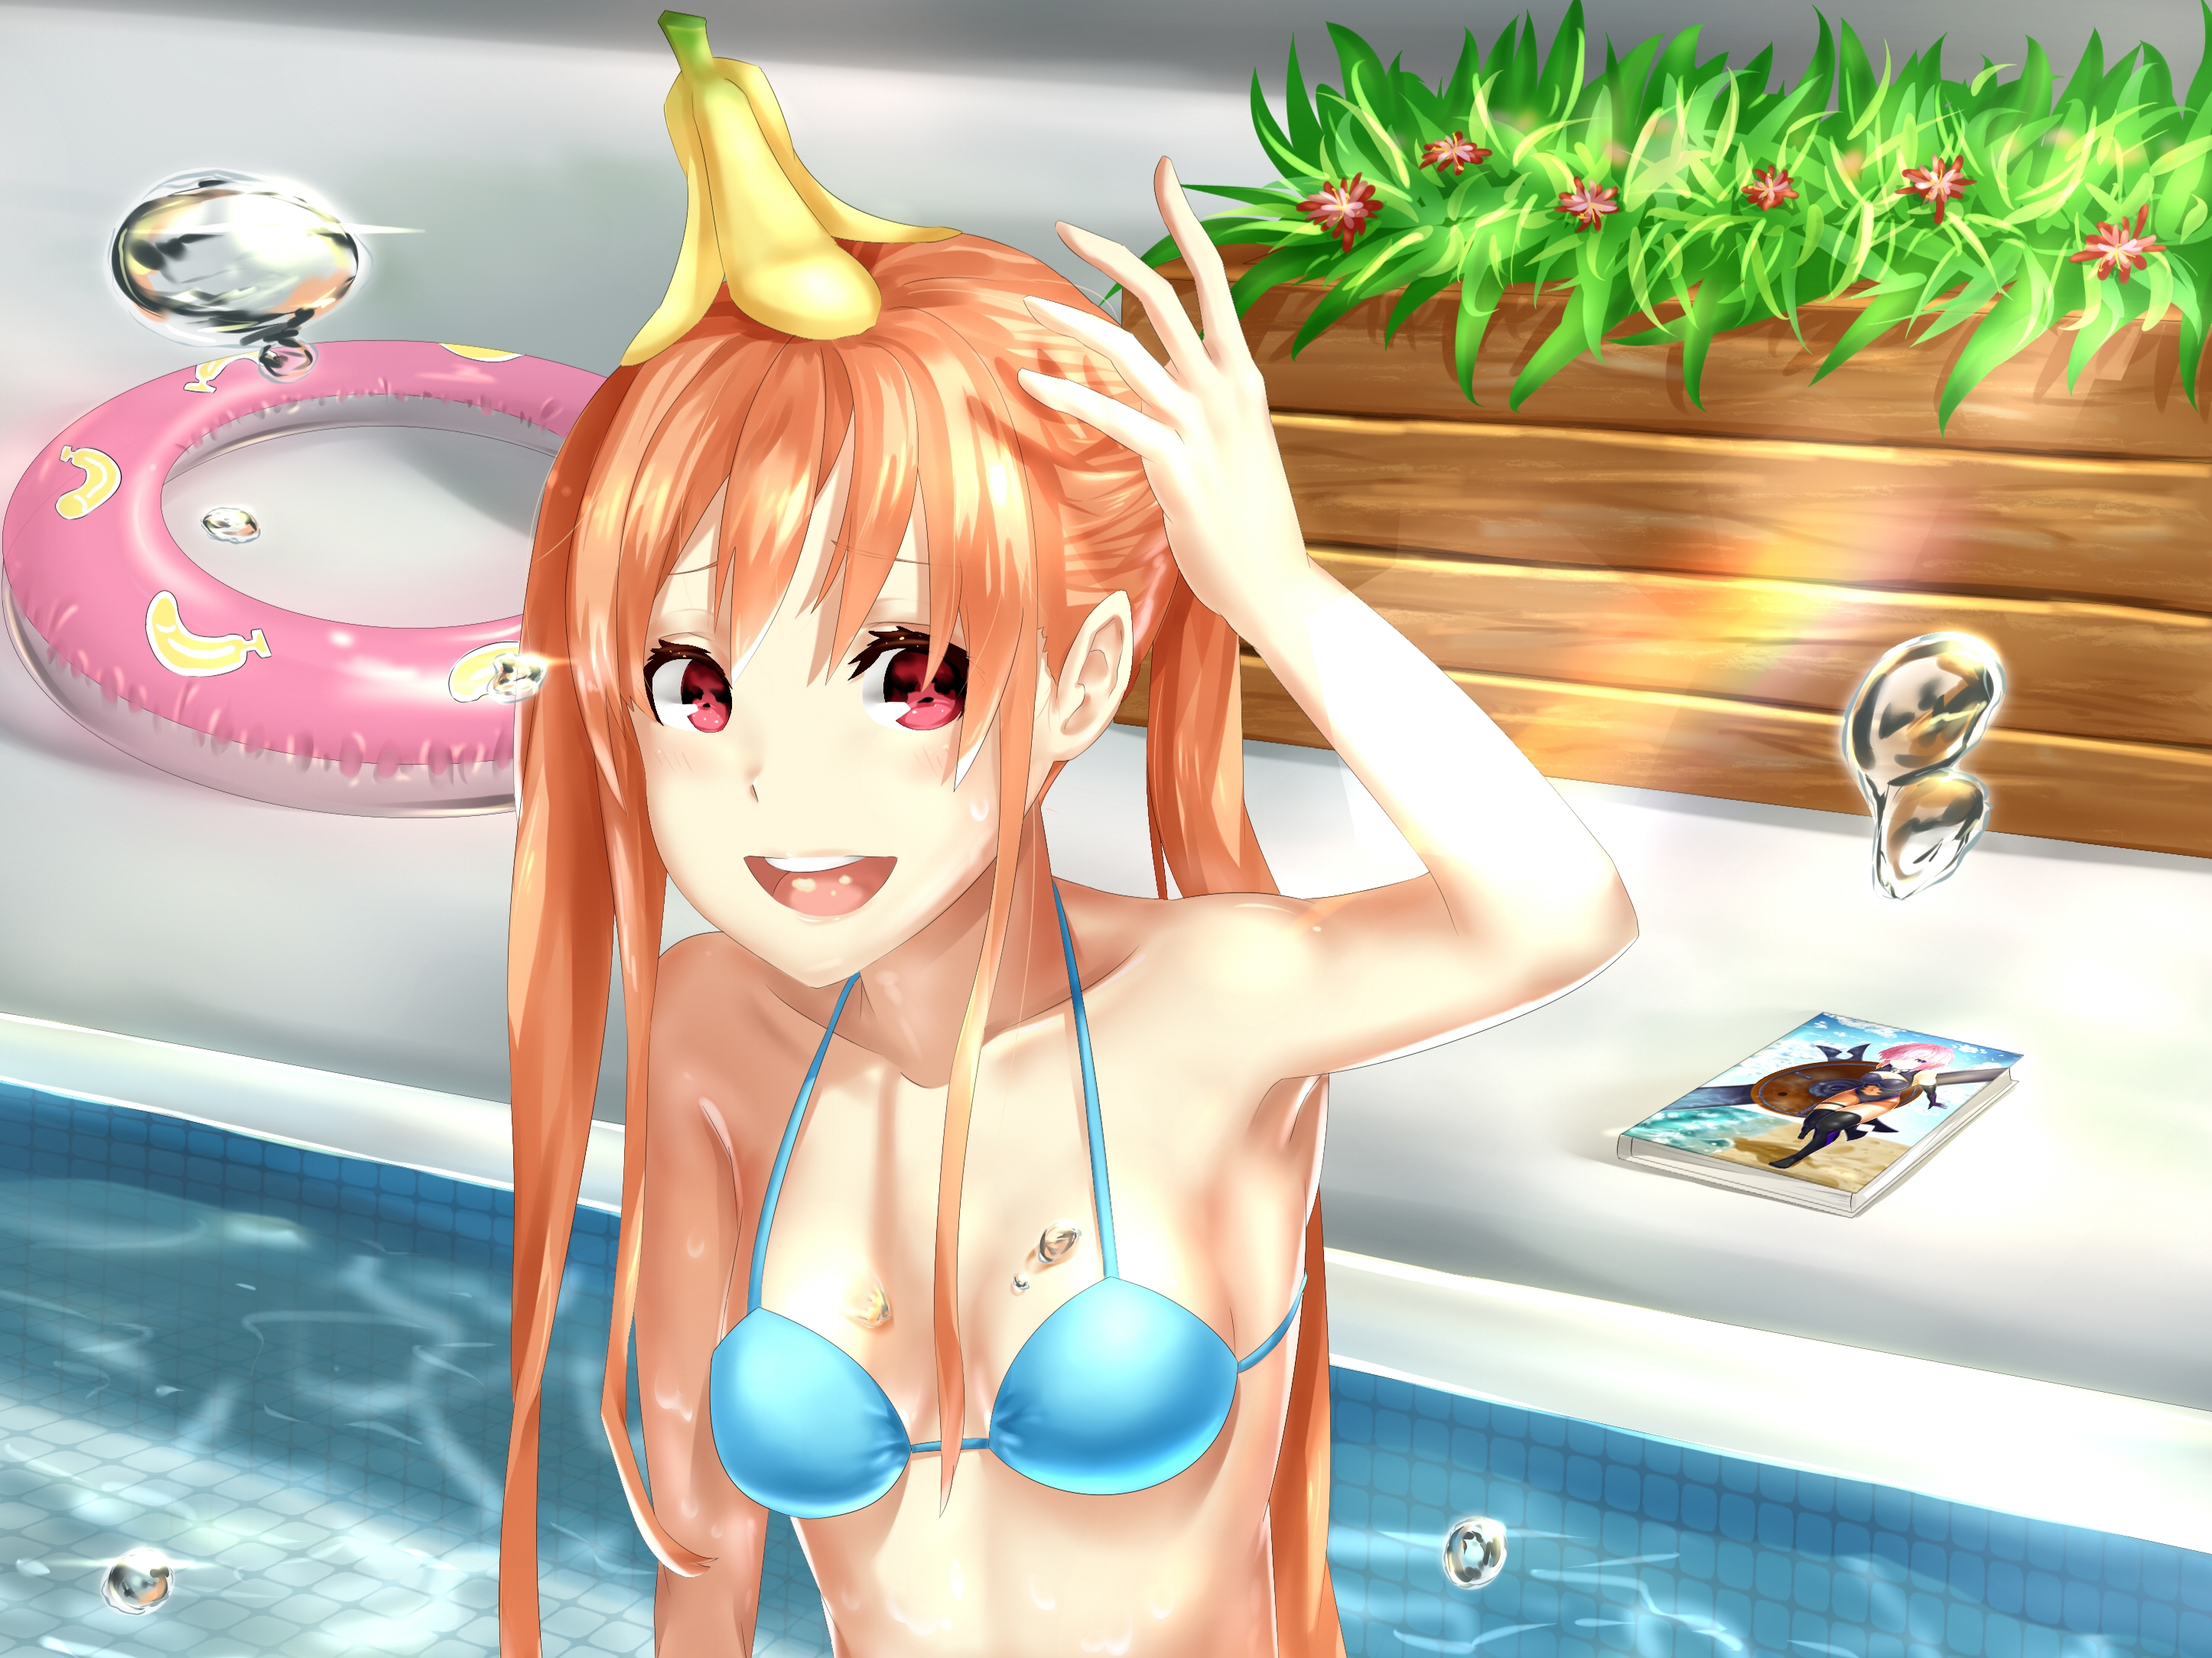 963870 descargar imagen animado, aho girl, bikini, yoshiko hanabatake: fondos de pantalla y protectores de pantalla gratis